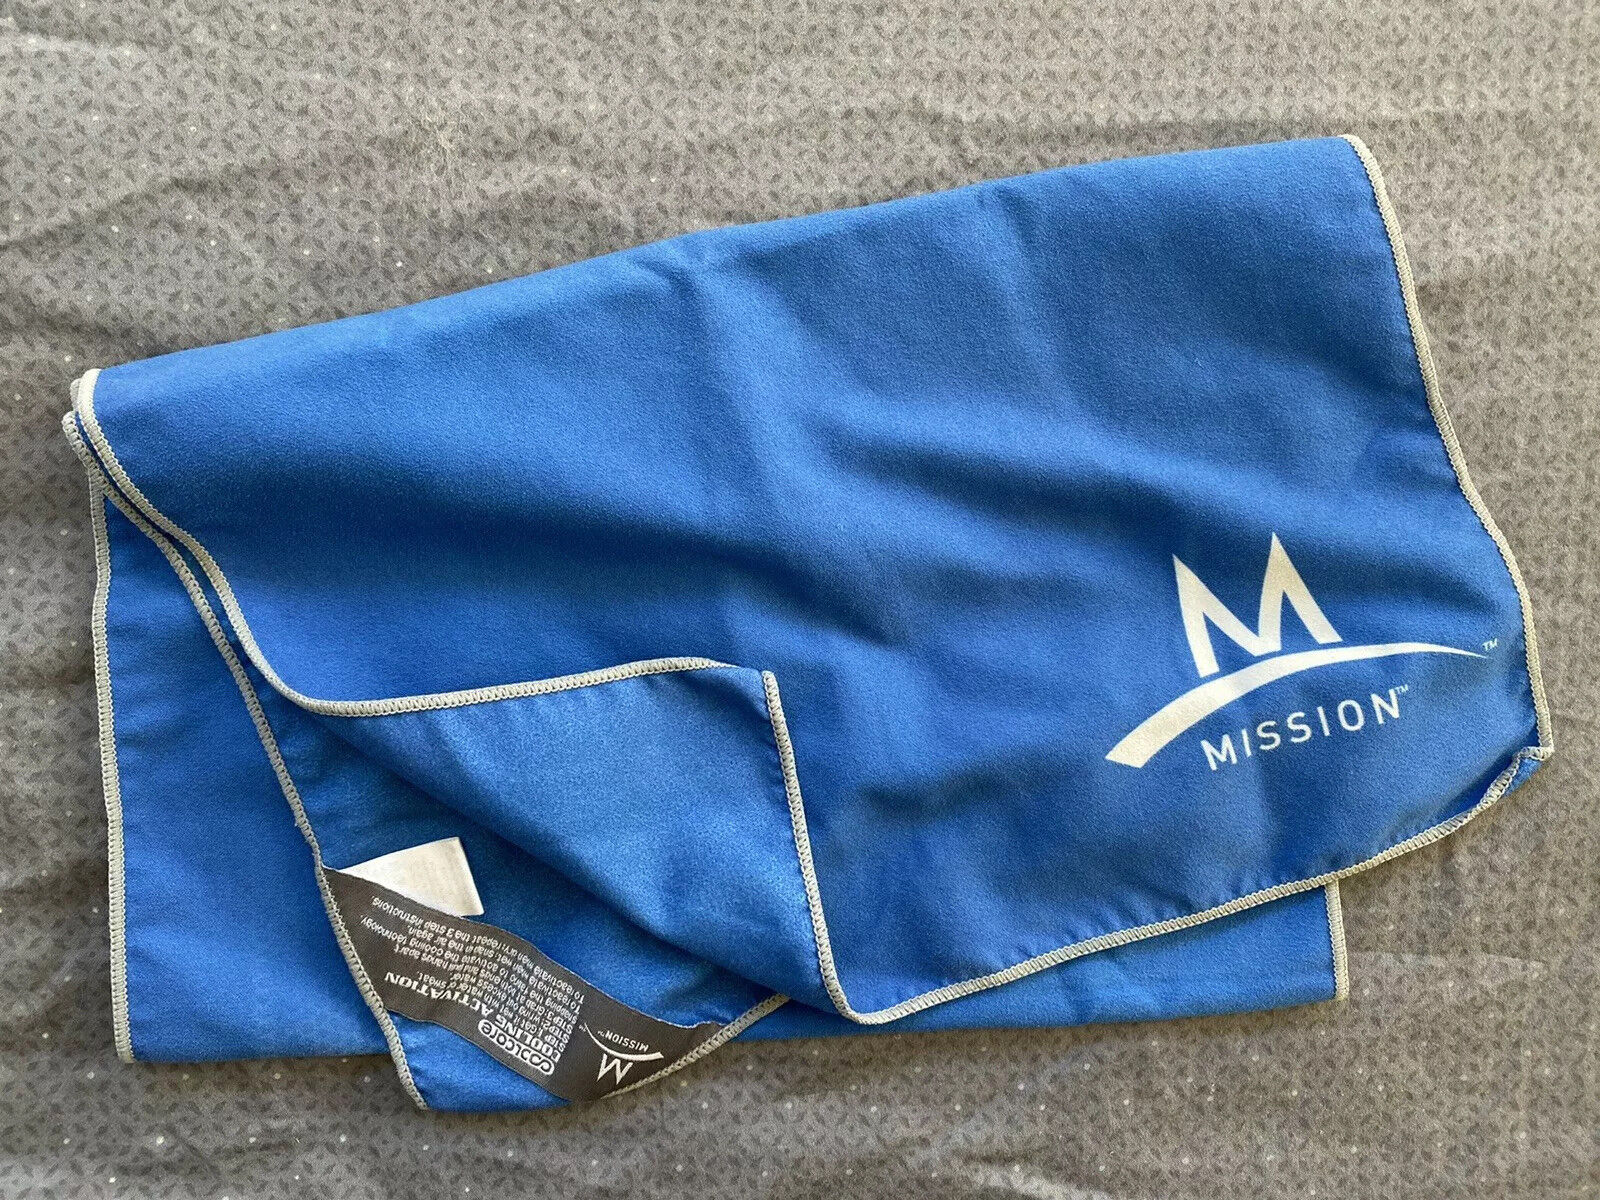 Mission VaporActive Yoga Hand Towel Glaze Bright Blue/Solid 10